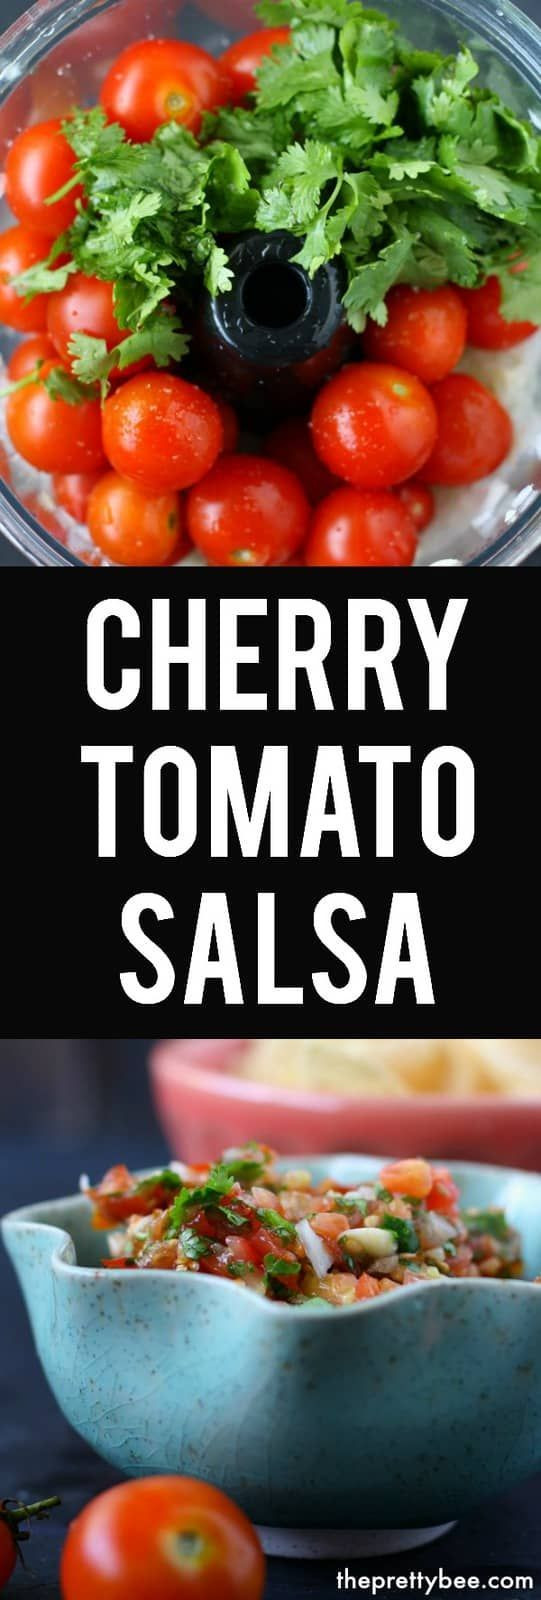 Cherry Tomatoes Salsa Recipes
 Simple Cherry Tomato Salsa Recipe